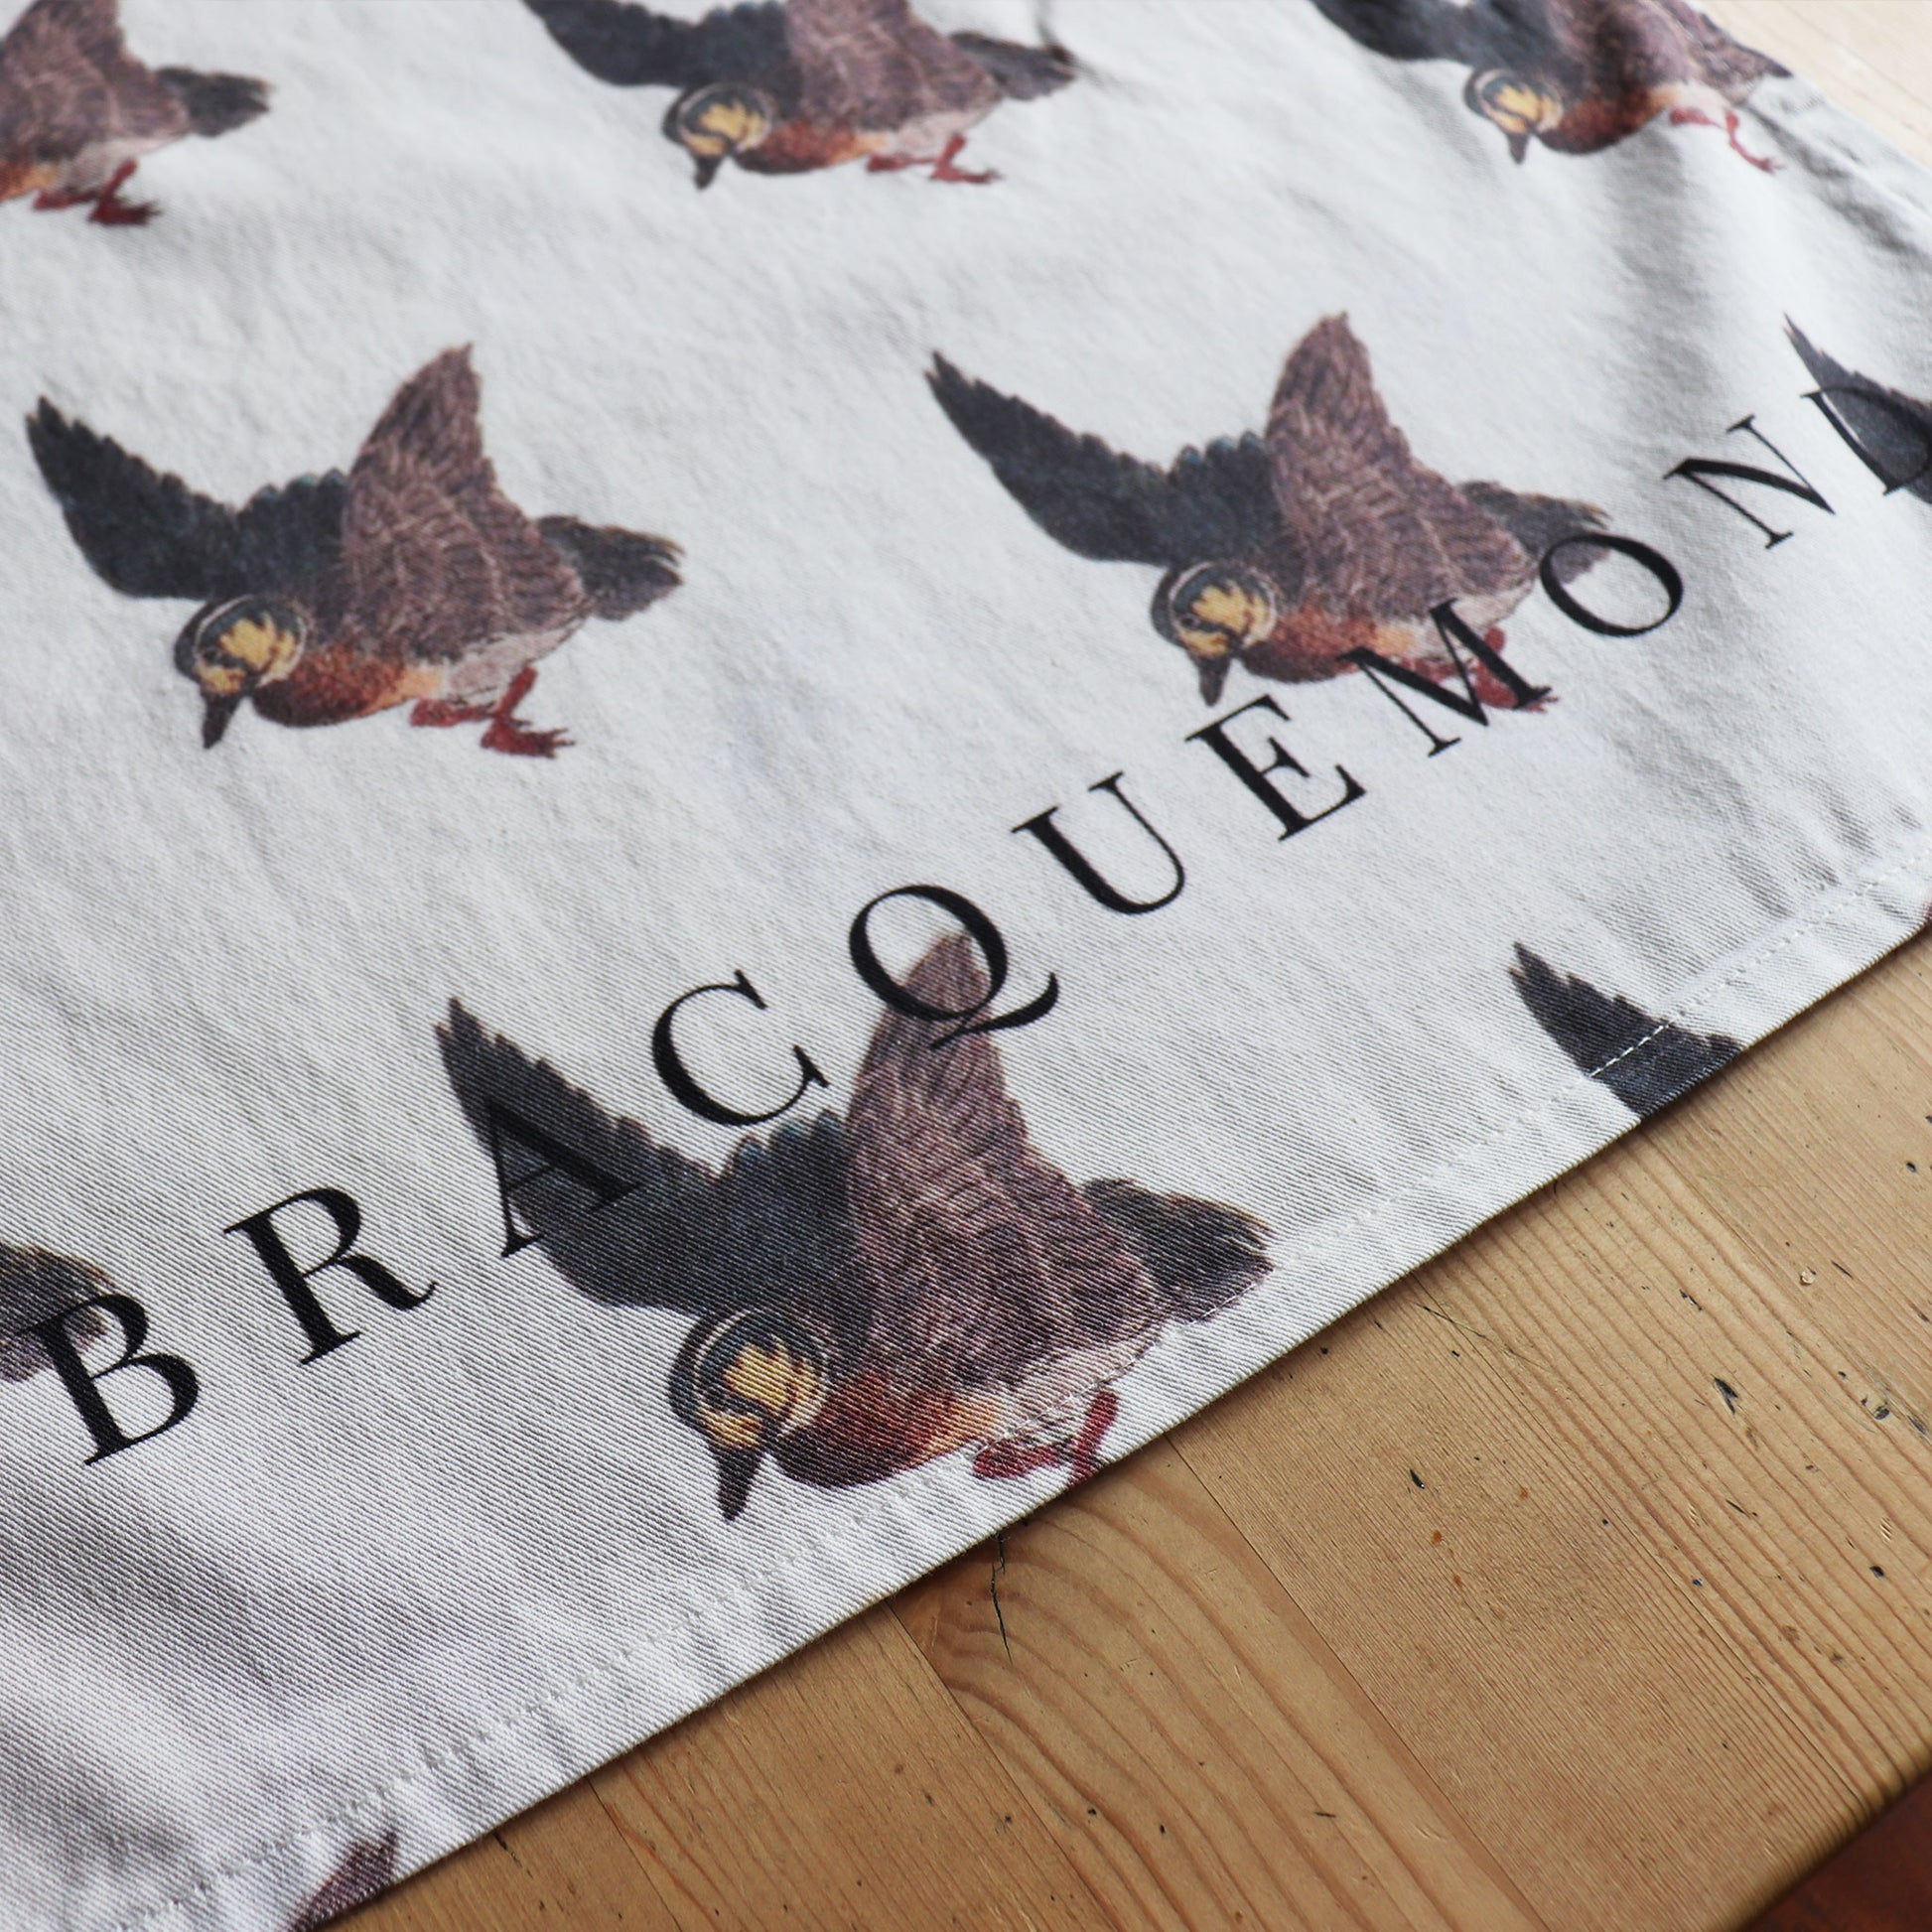 Bracquemond Duck Print Kitchen Towel. Repreating duck print on a soft kitchen towel. Close up image of the duck image